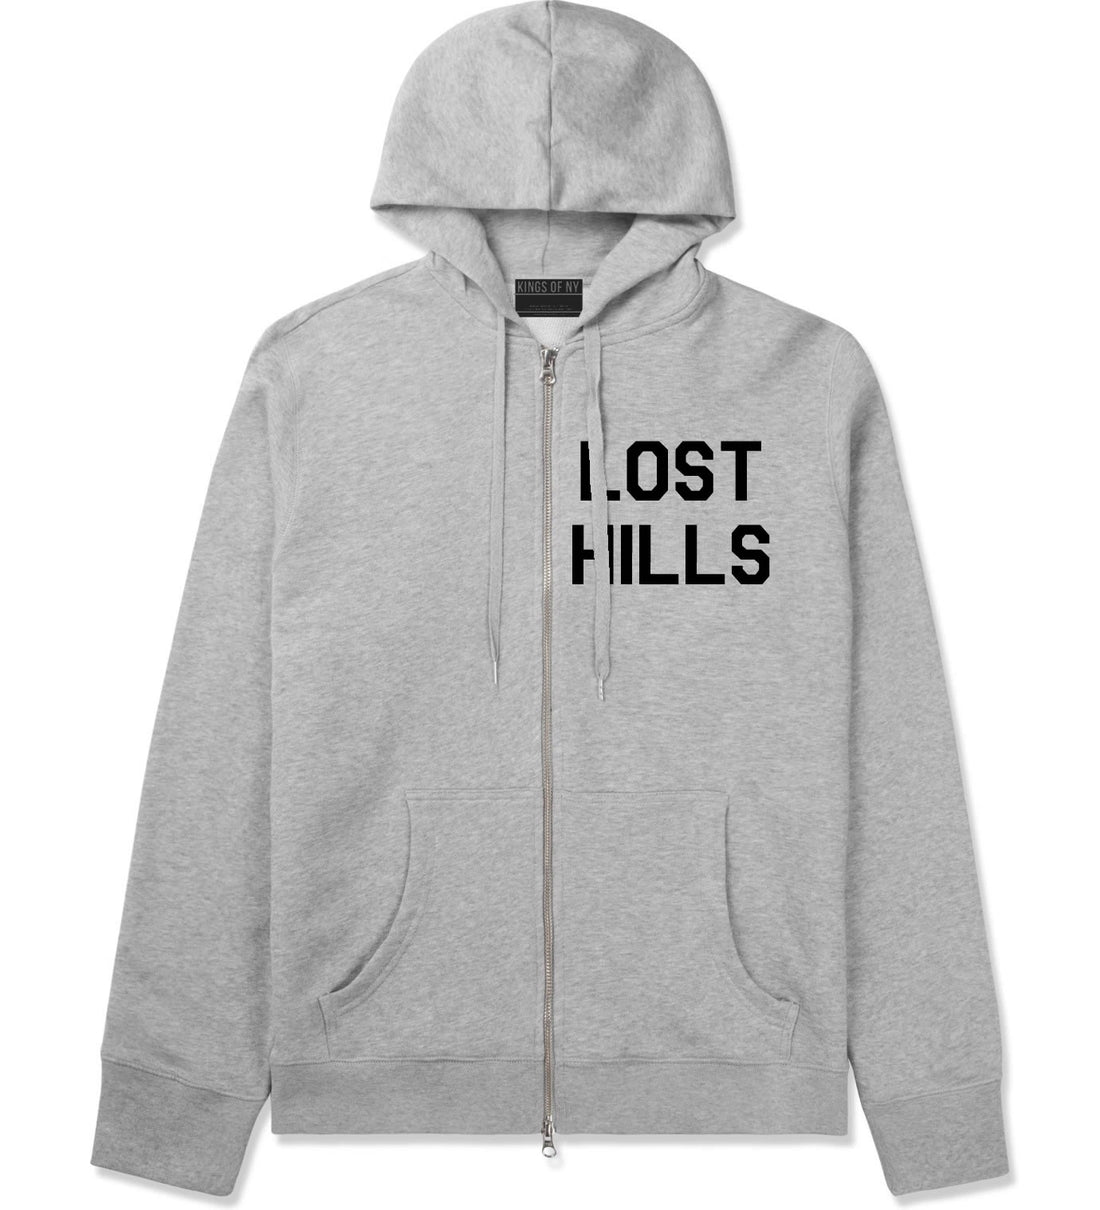 Lost Hills Zip Up Hoodie